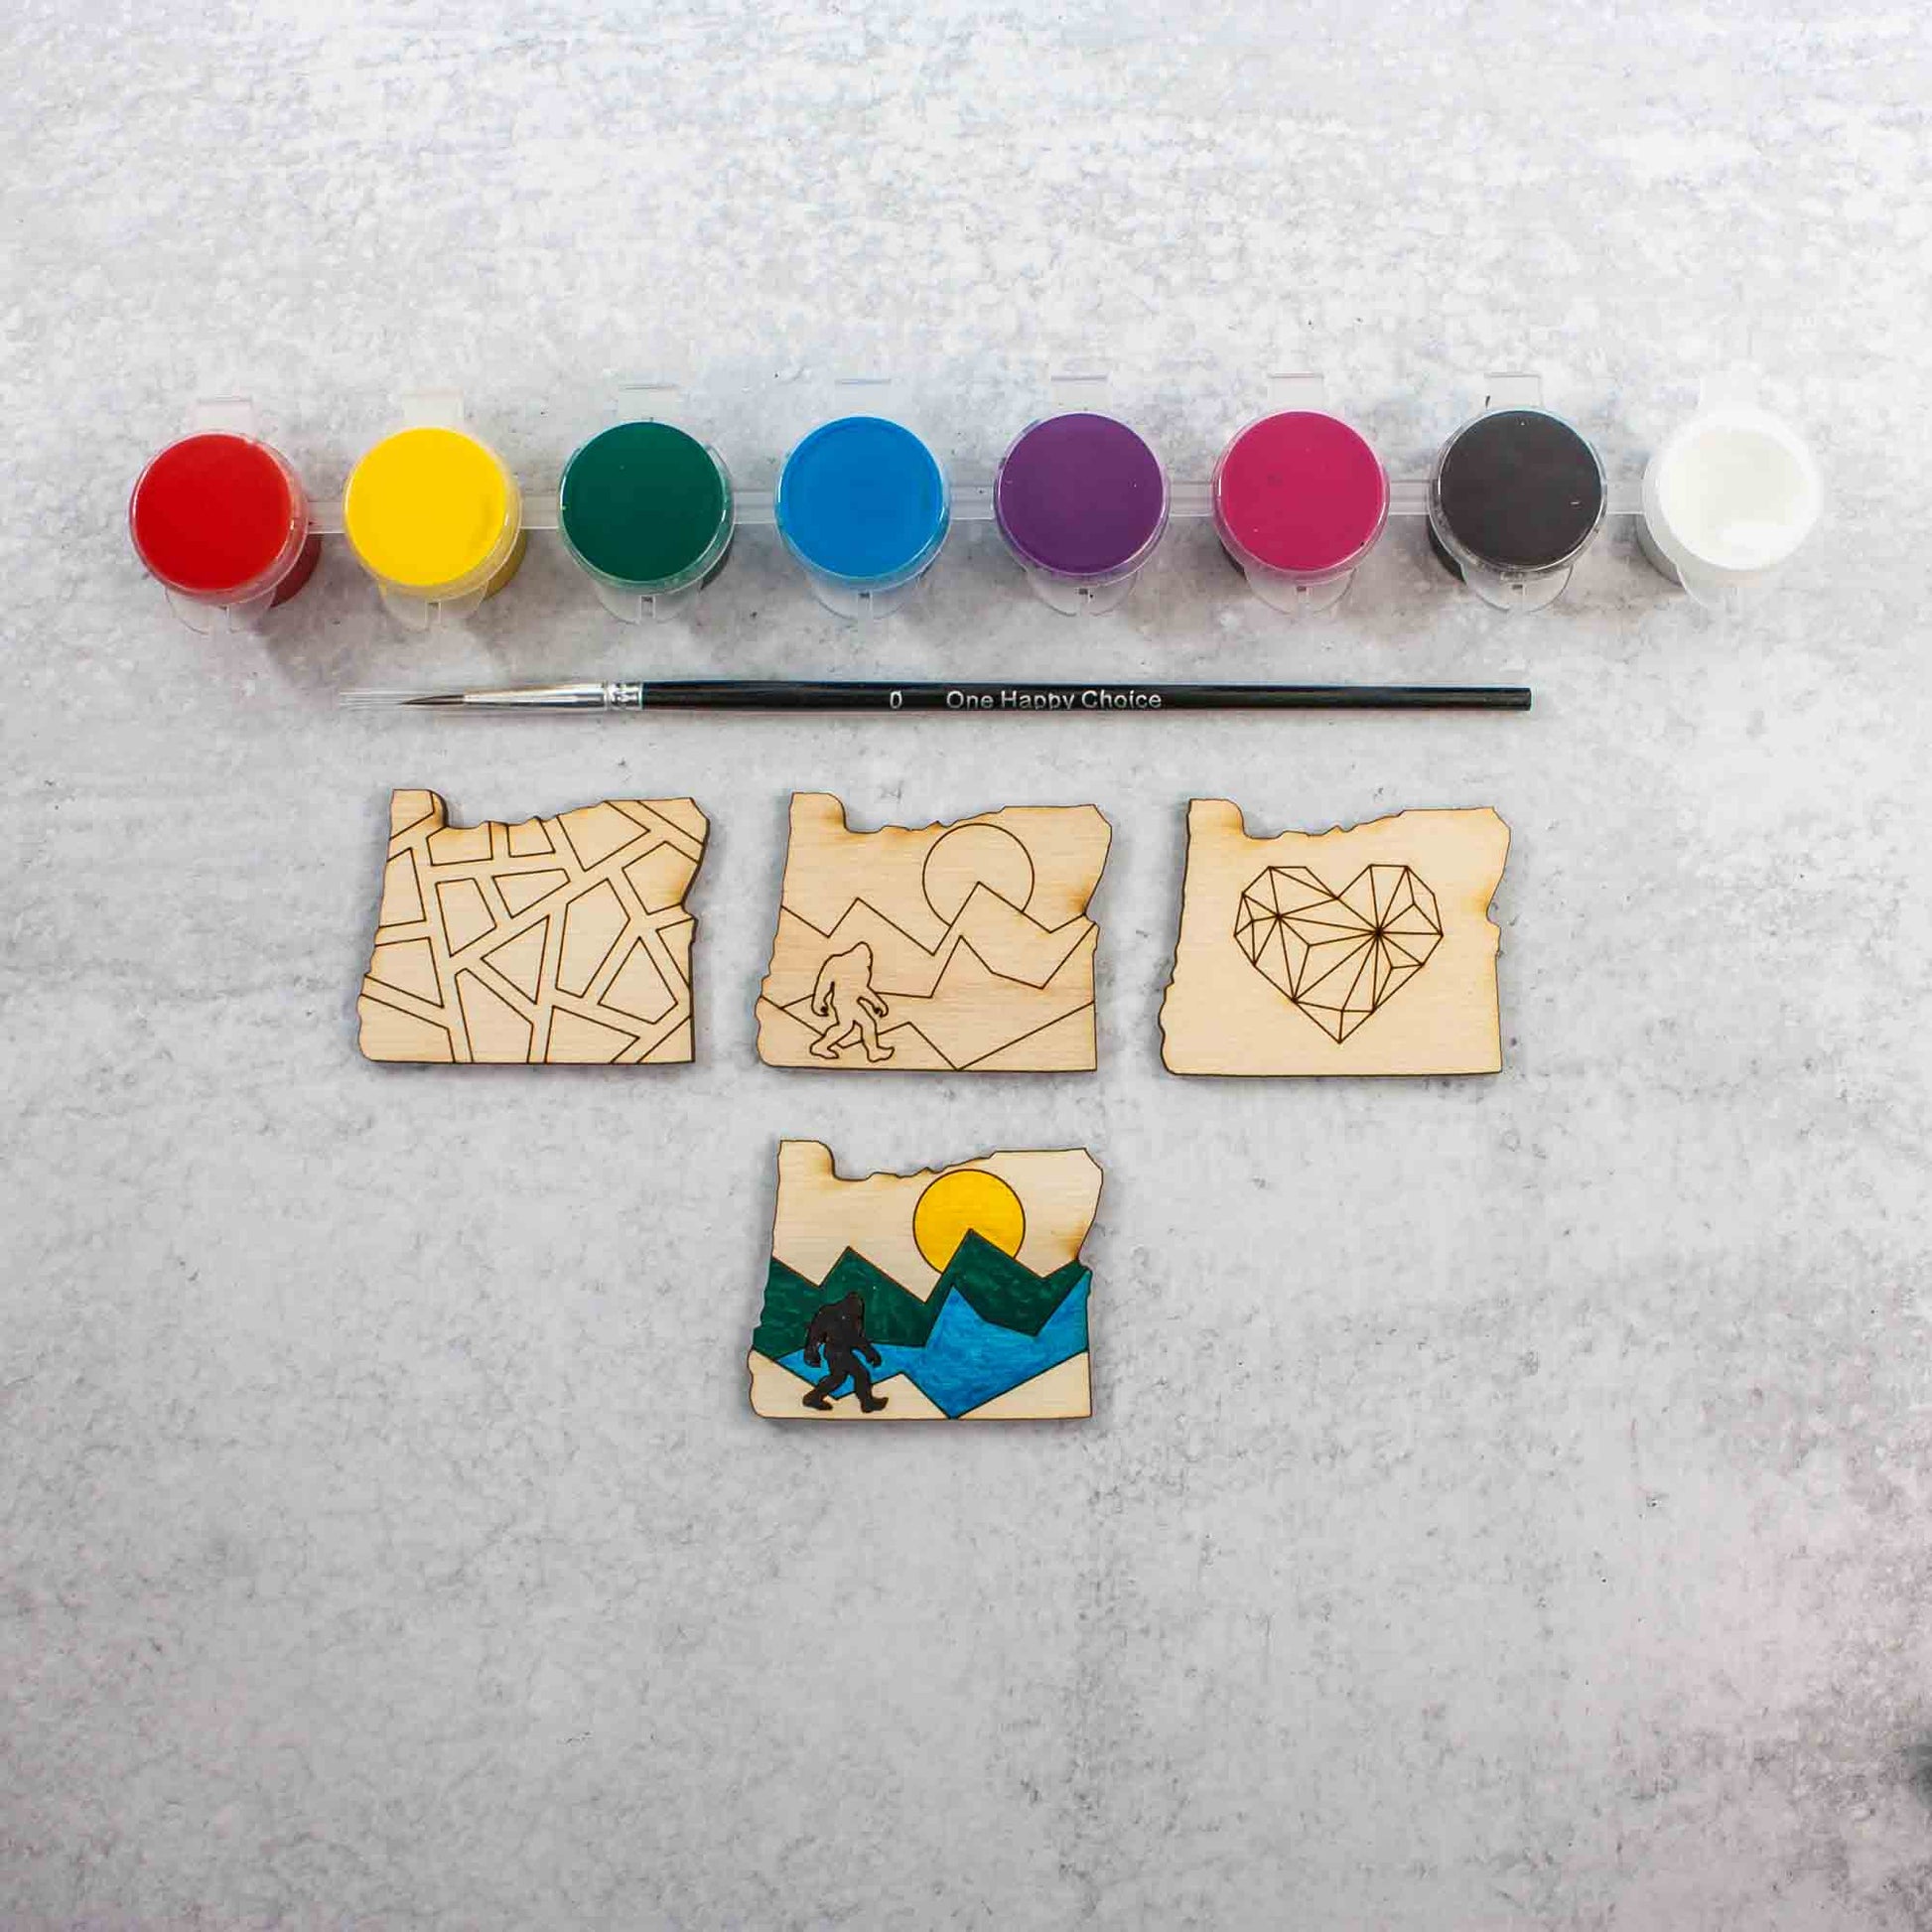 DIY Magnets - Make your own magnets oregon kit - by LeeMo Designs in Bend, Oregon